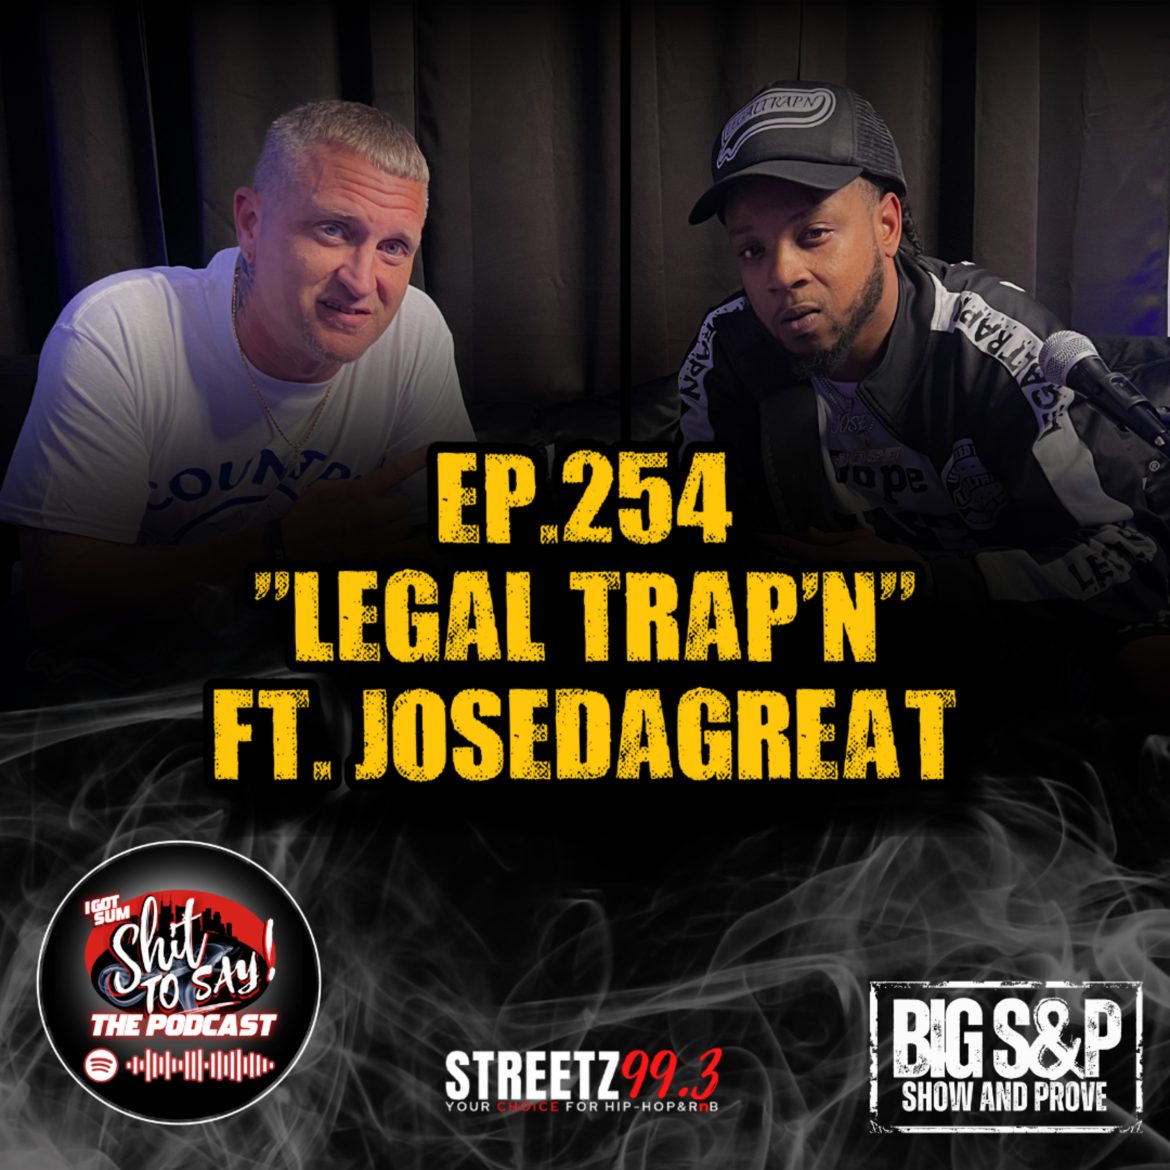 Black Podcasting - Episode 254 - "LegalTrapN" Feat. JoseDaGreat